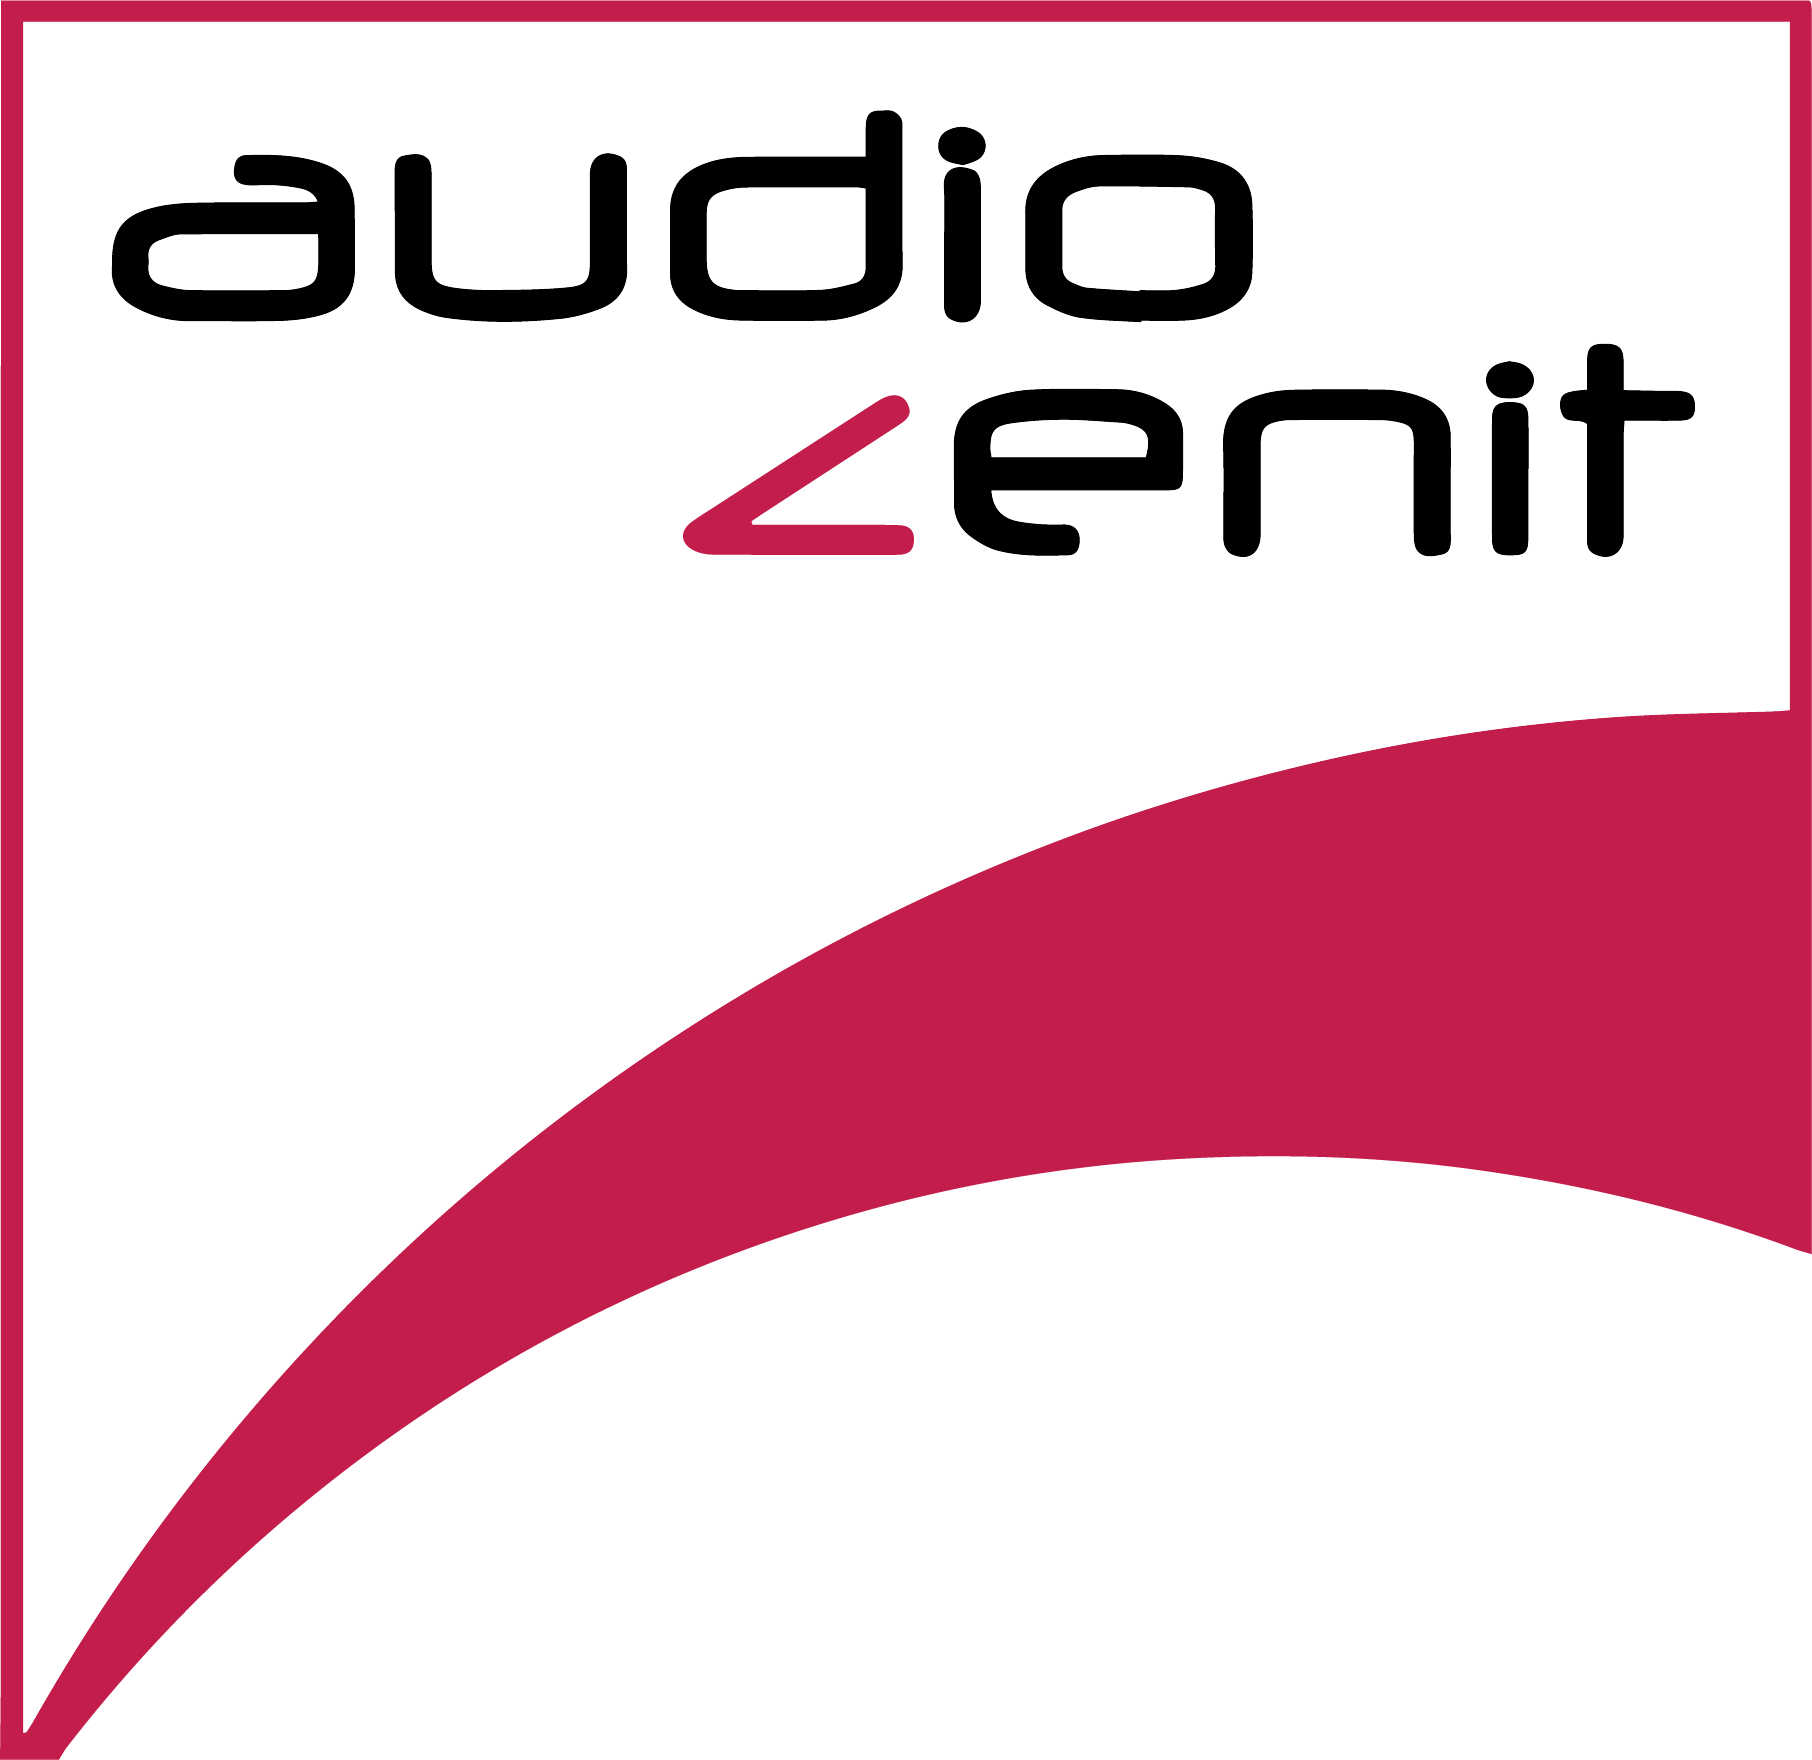 Audio Zenit